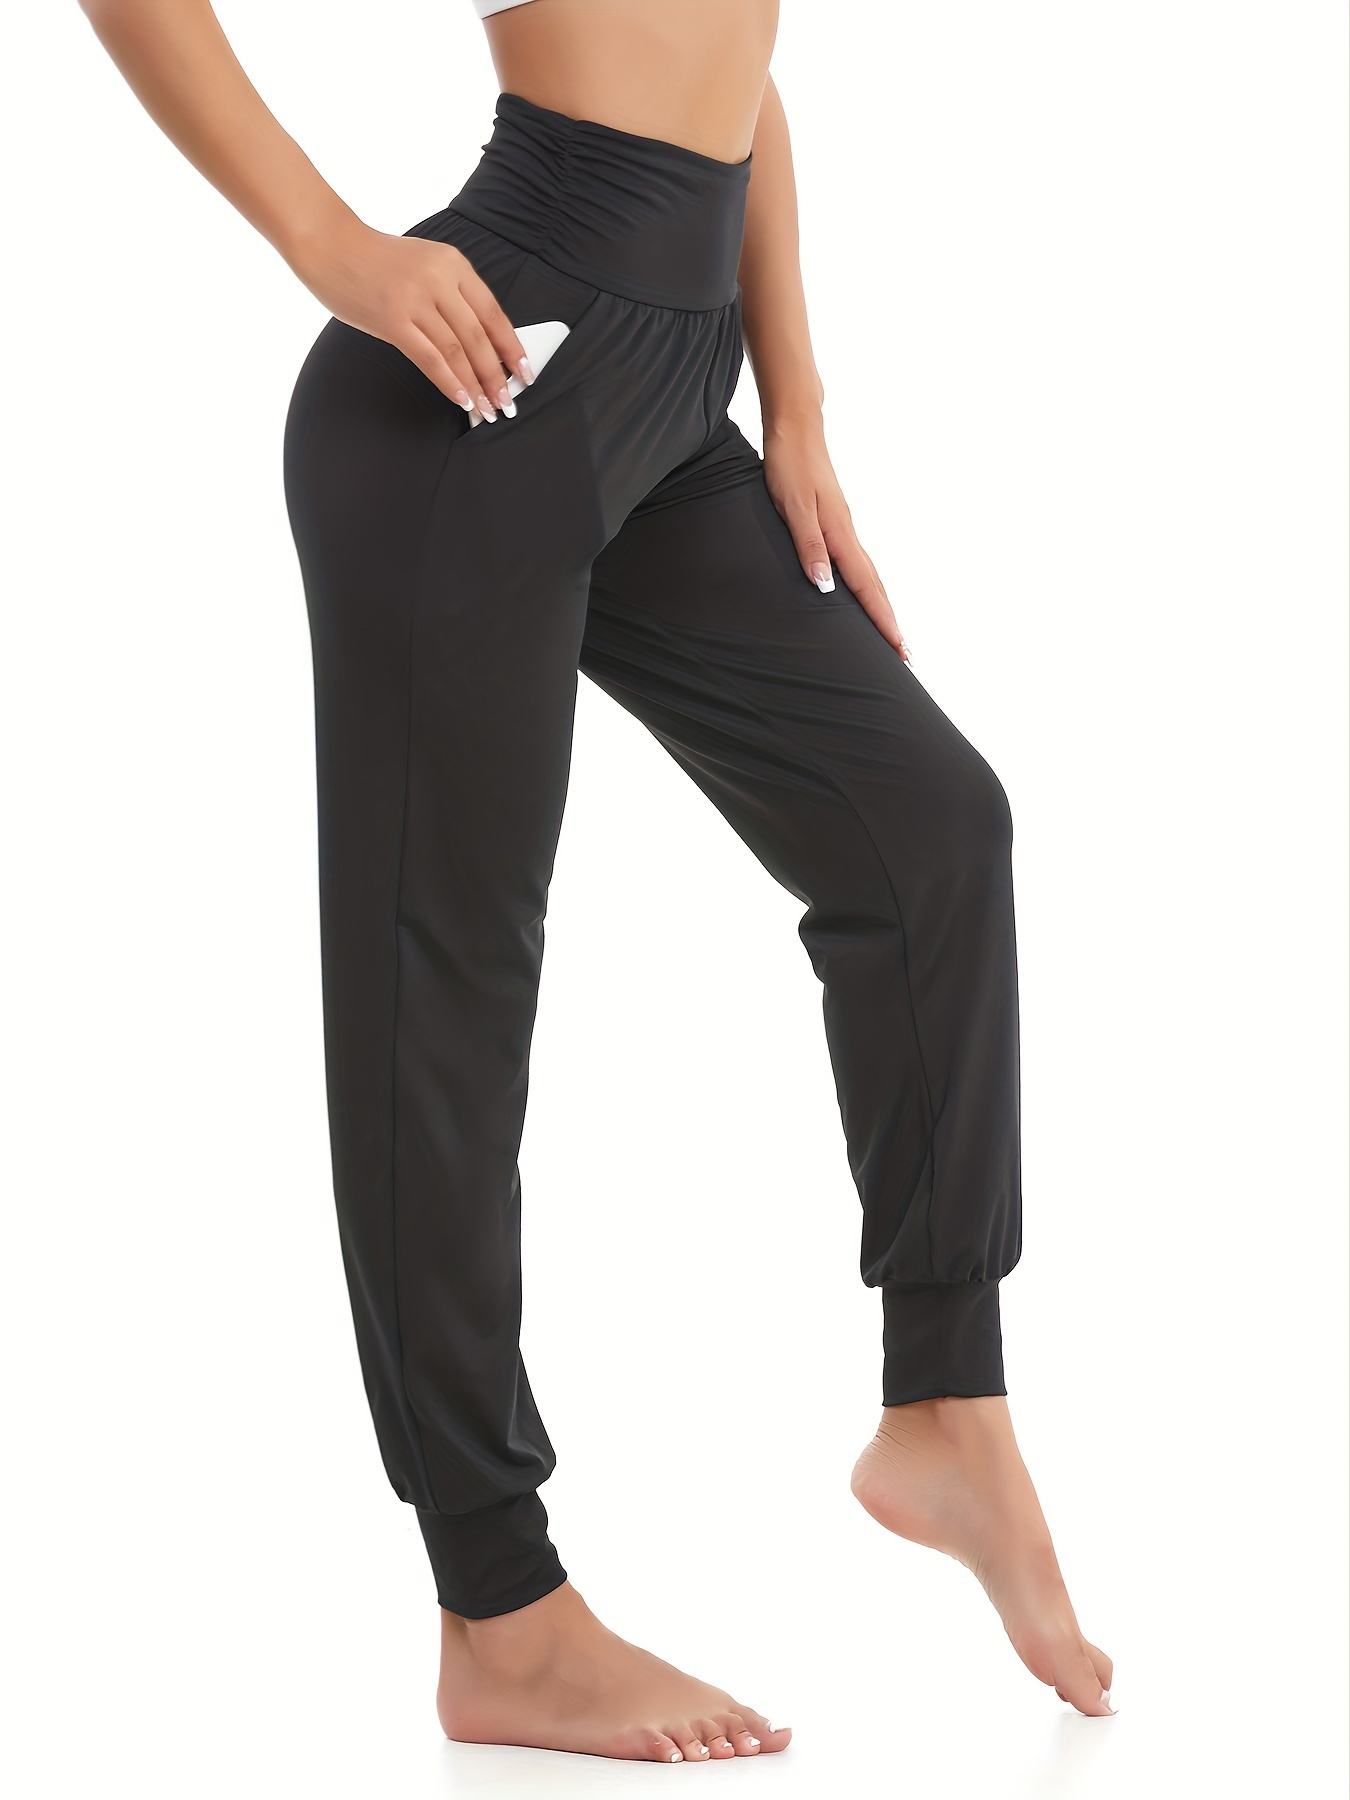 Baggy Yoga Pantshigh Waist Harem Yoga Pants For Women - Solid Color,  Elastic Waistband, Summer Casual